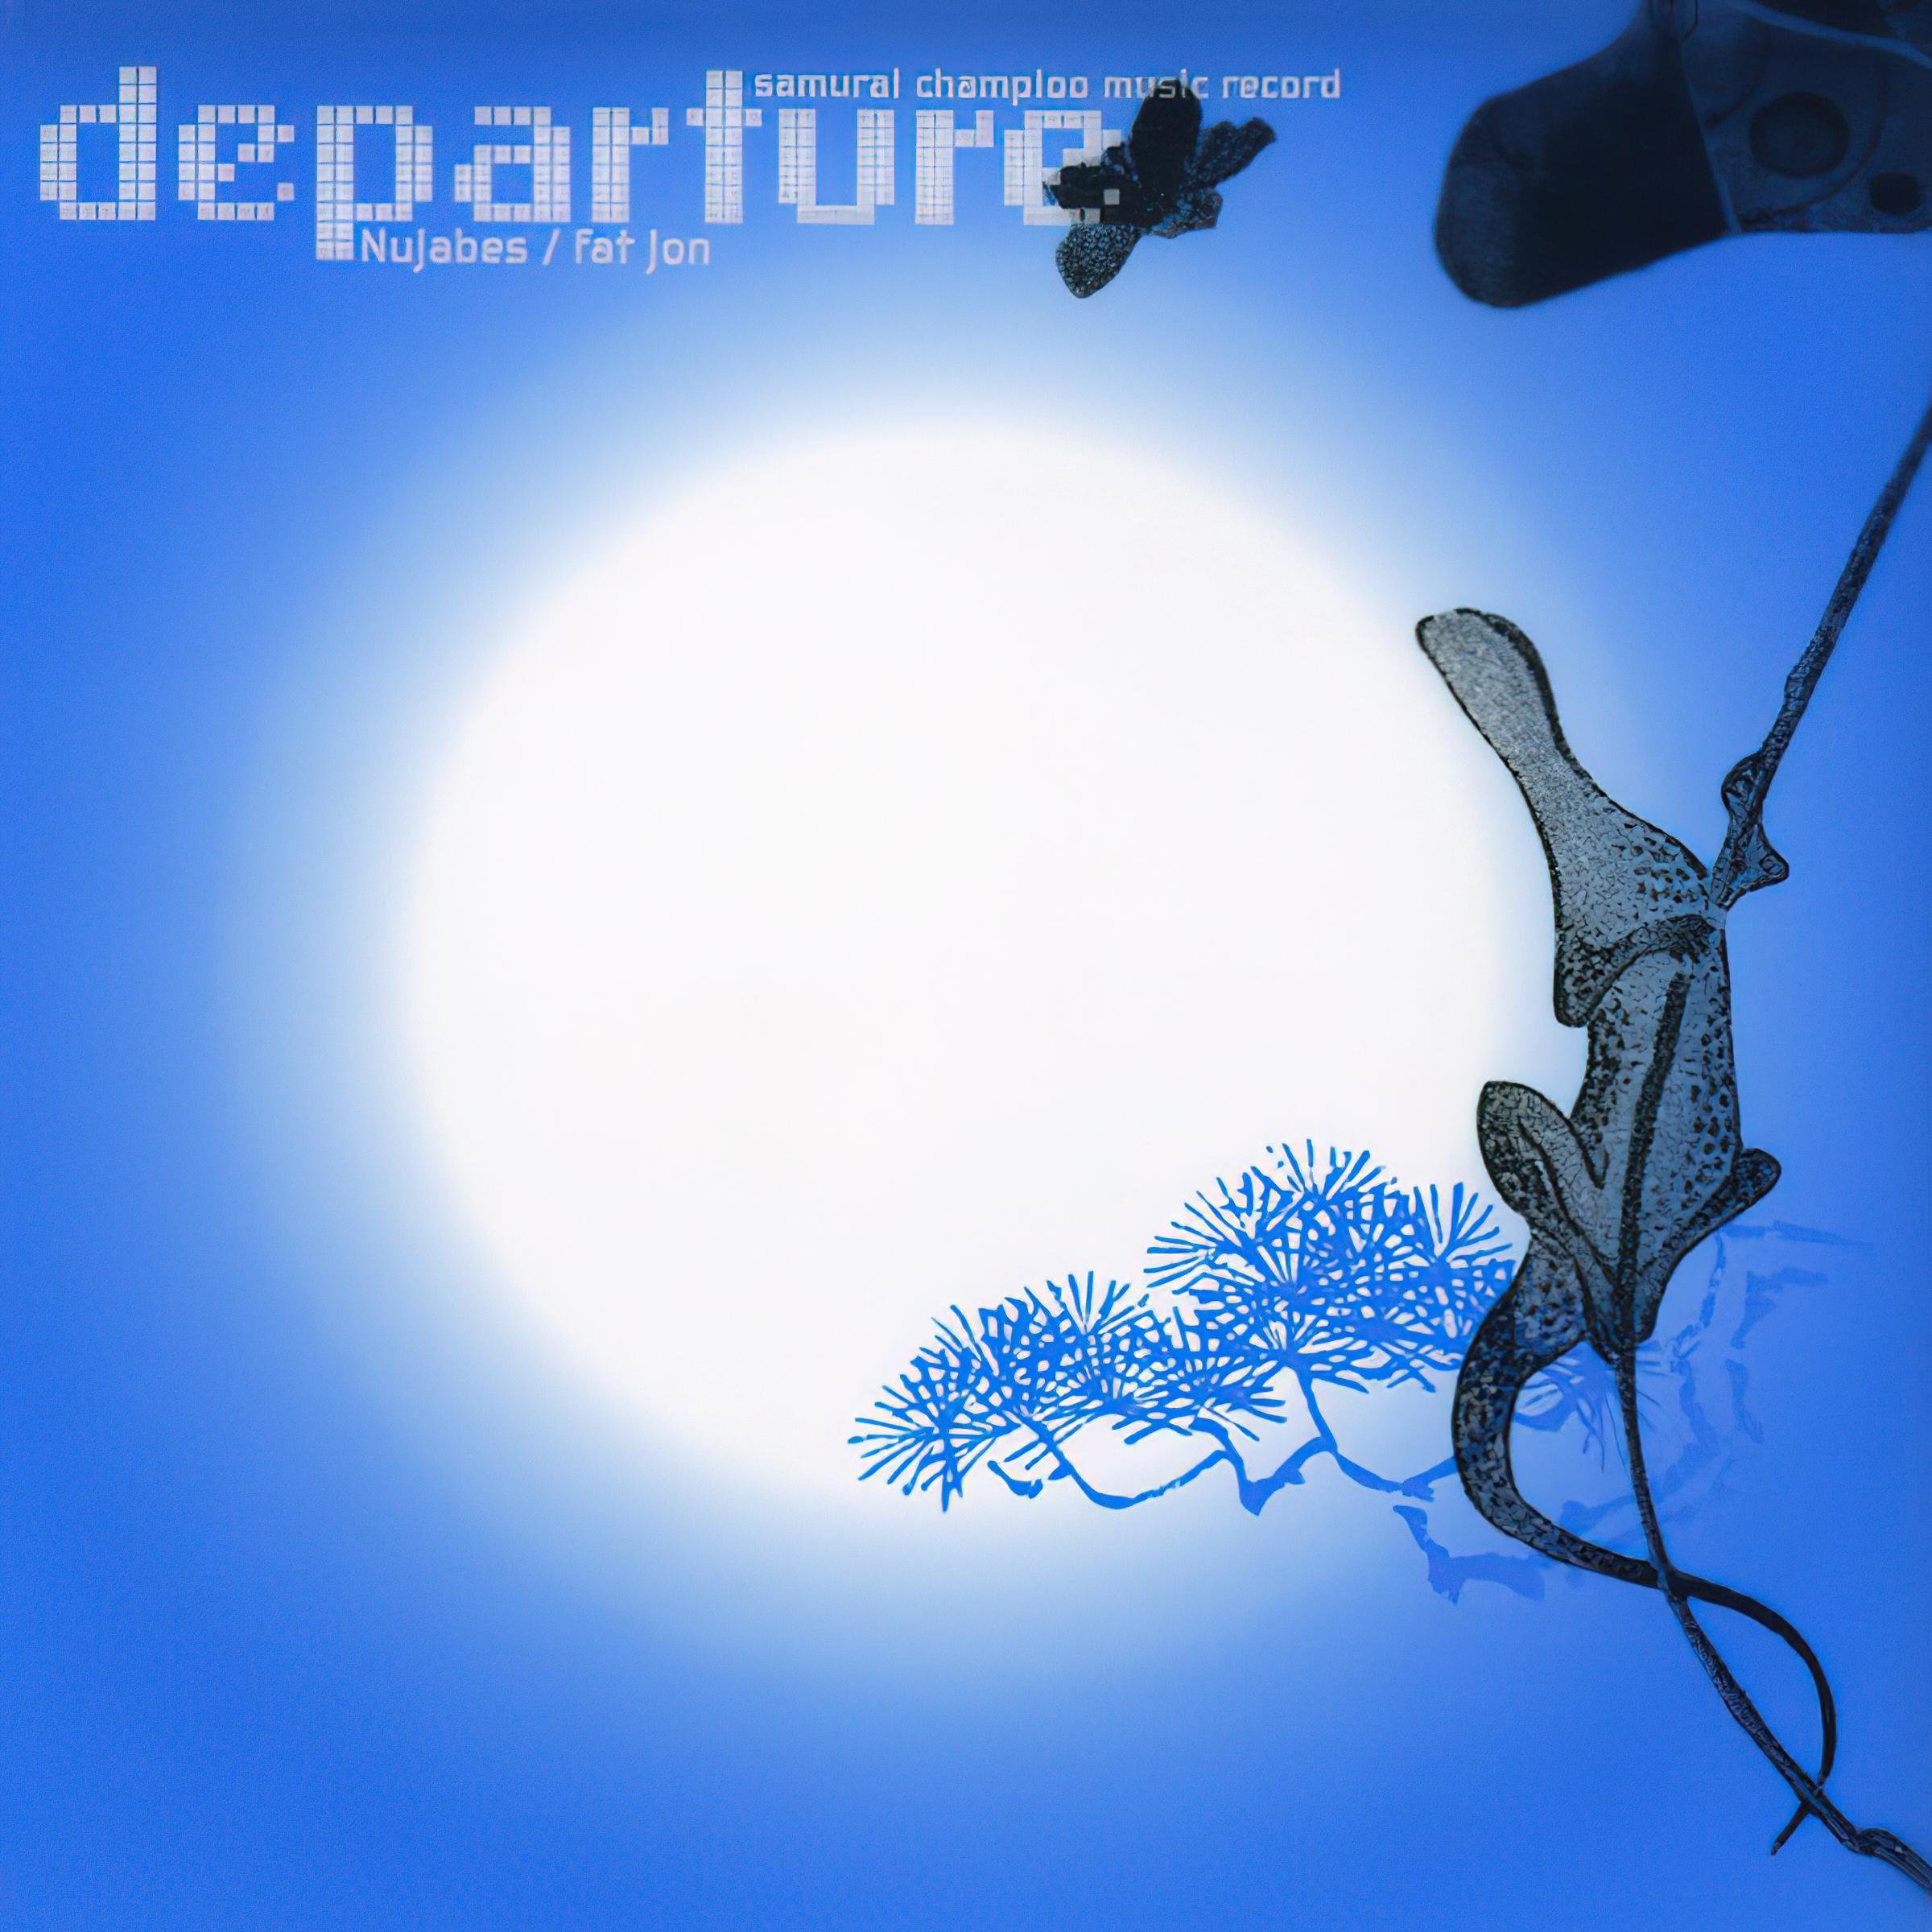 Nujabes & Fat Jon - Samurai Champloo Music Record: Departure